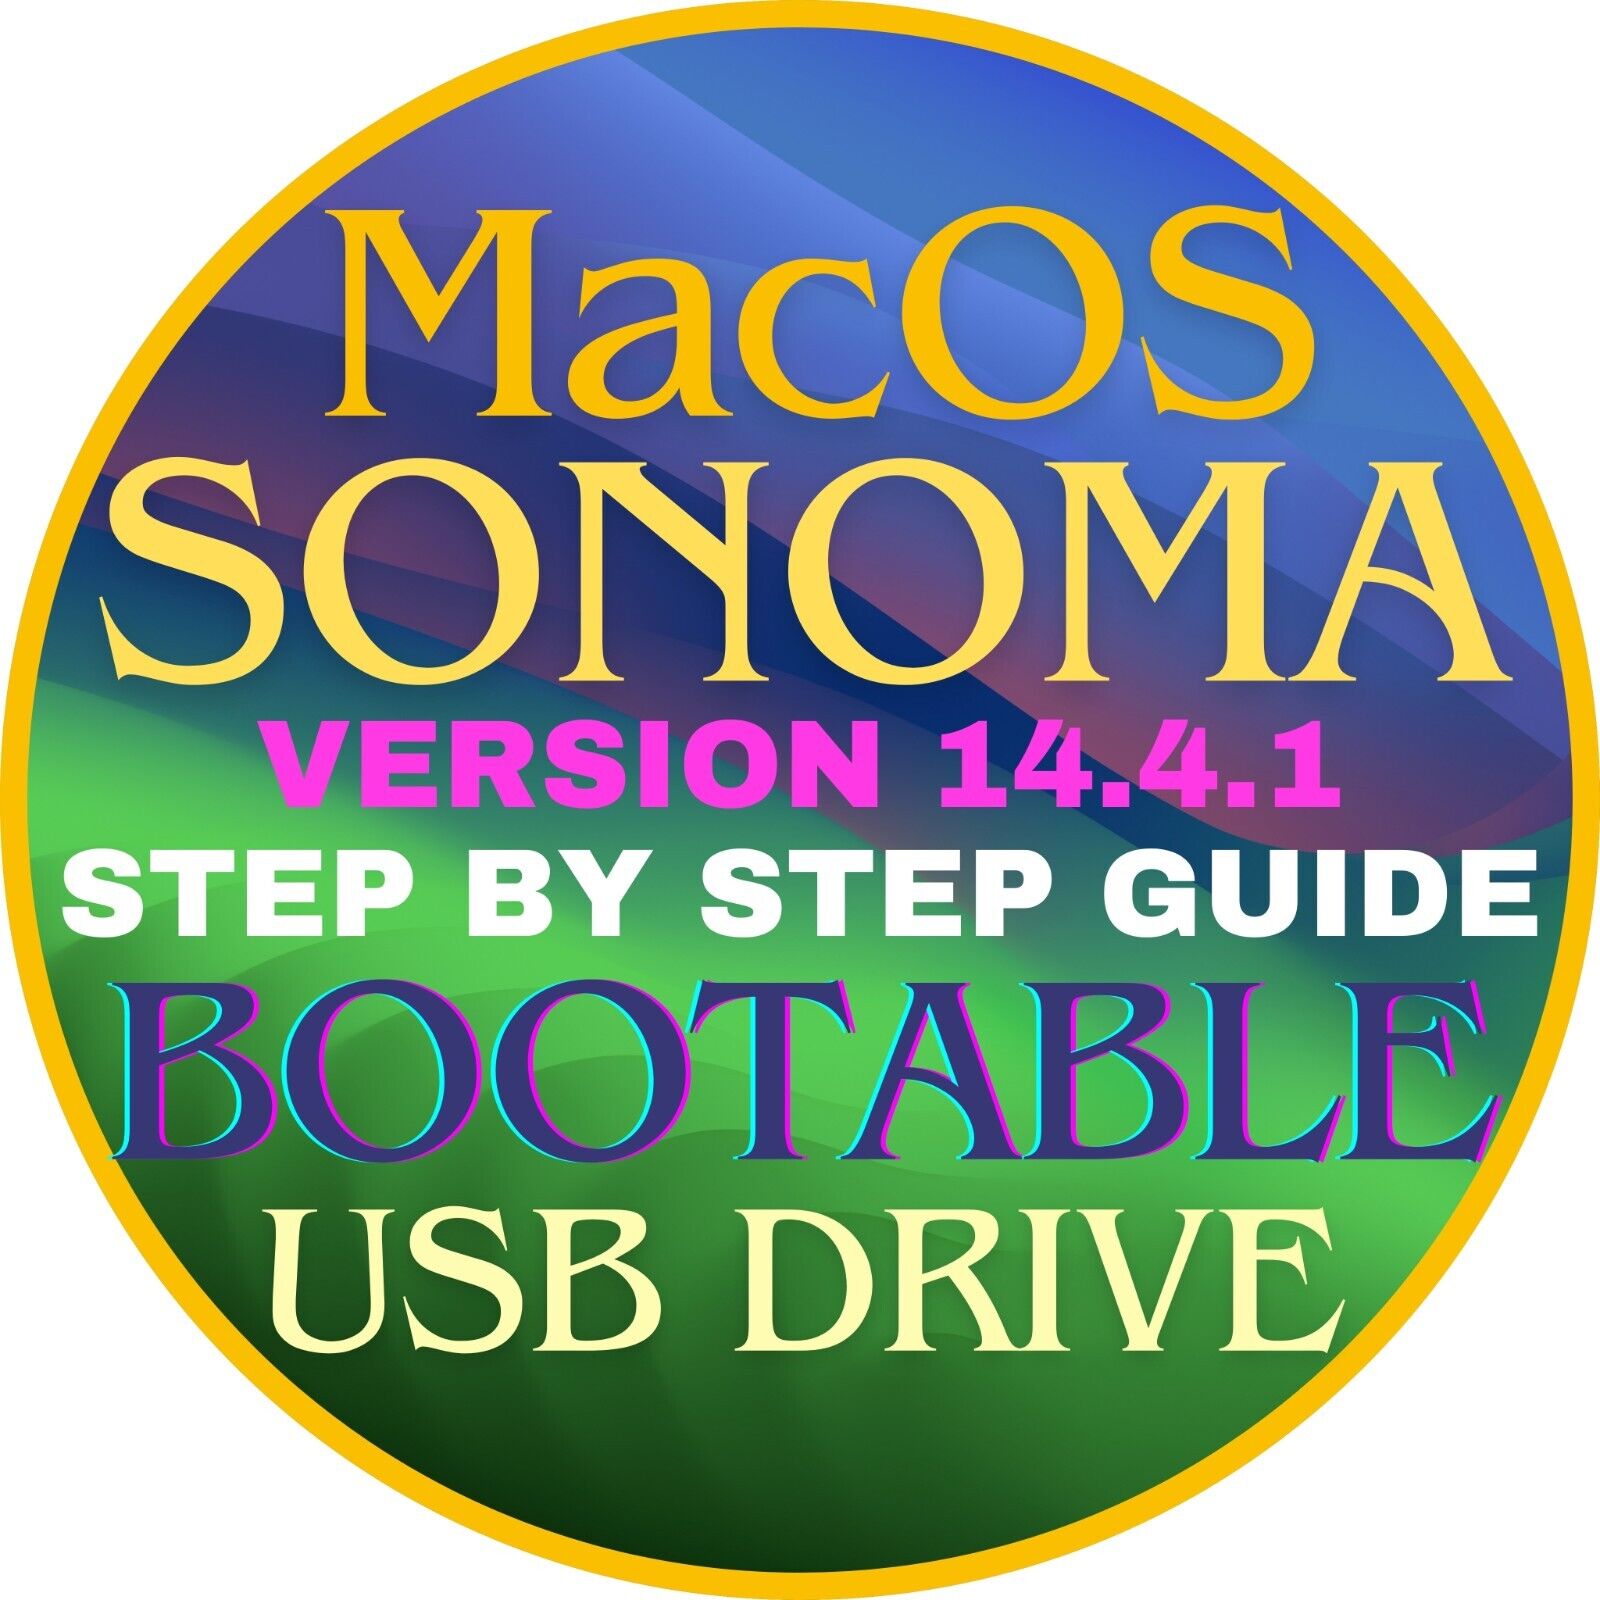 Mac OS Sonoma 14.4, Bootable USB, Install, Repair, Instructions, Fast Ship